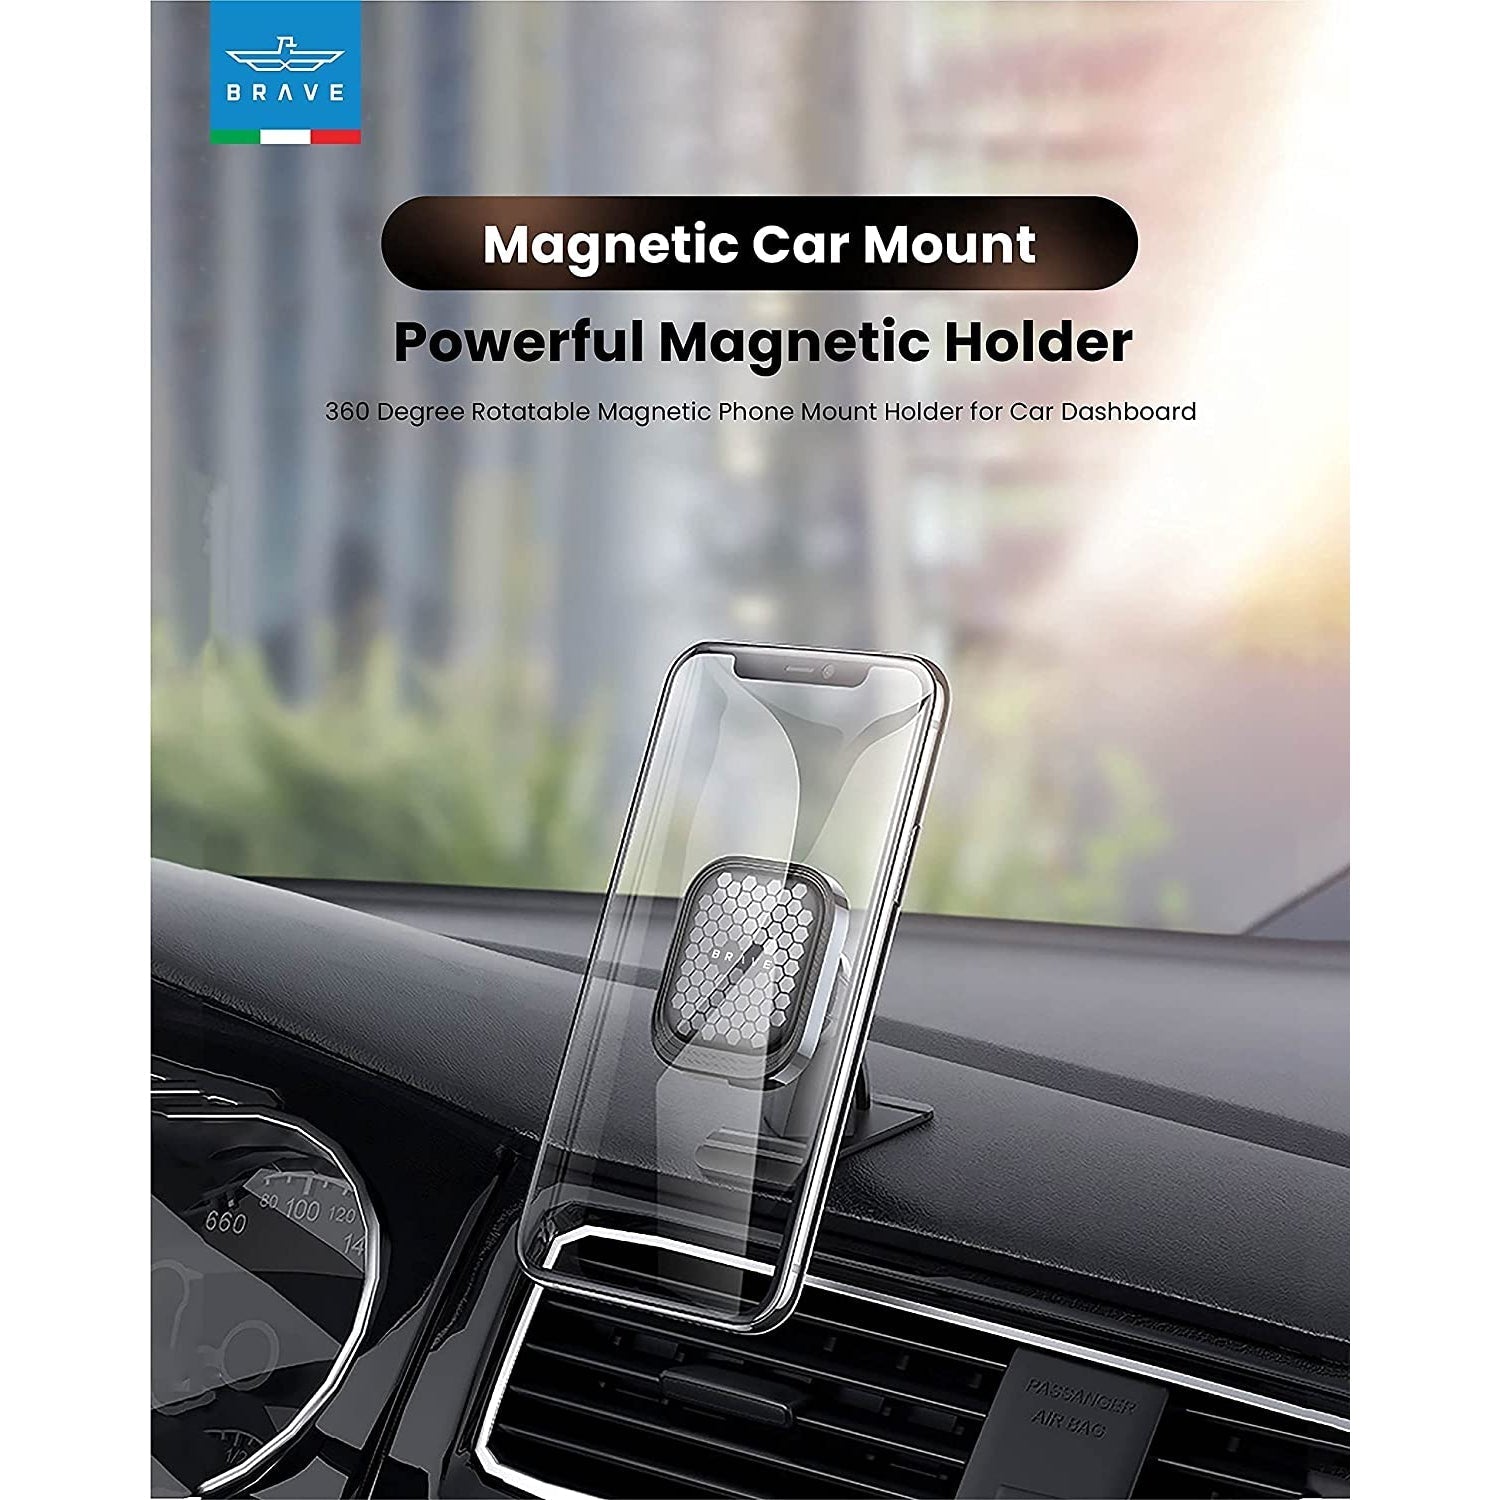 Brave Magnetic Car Mount Powerful Magnetic Holder